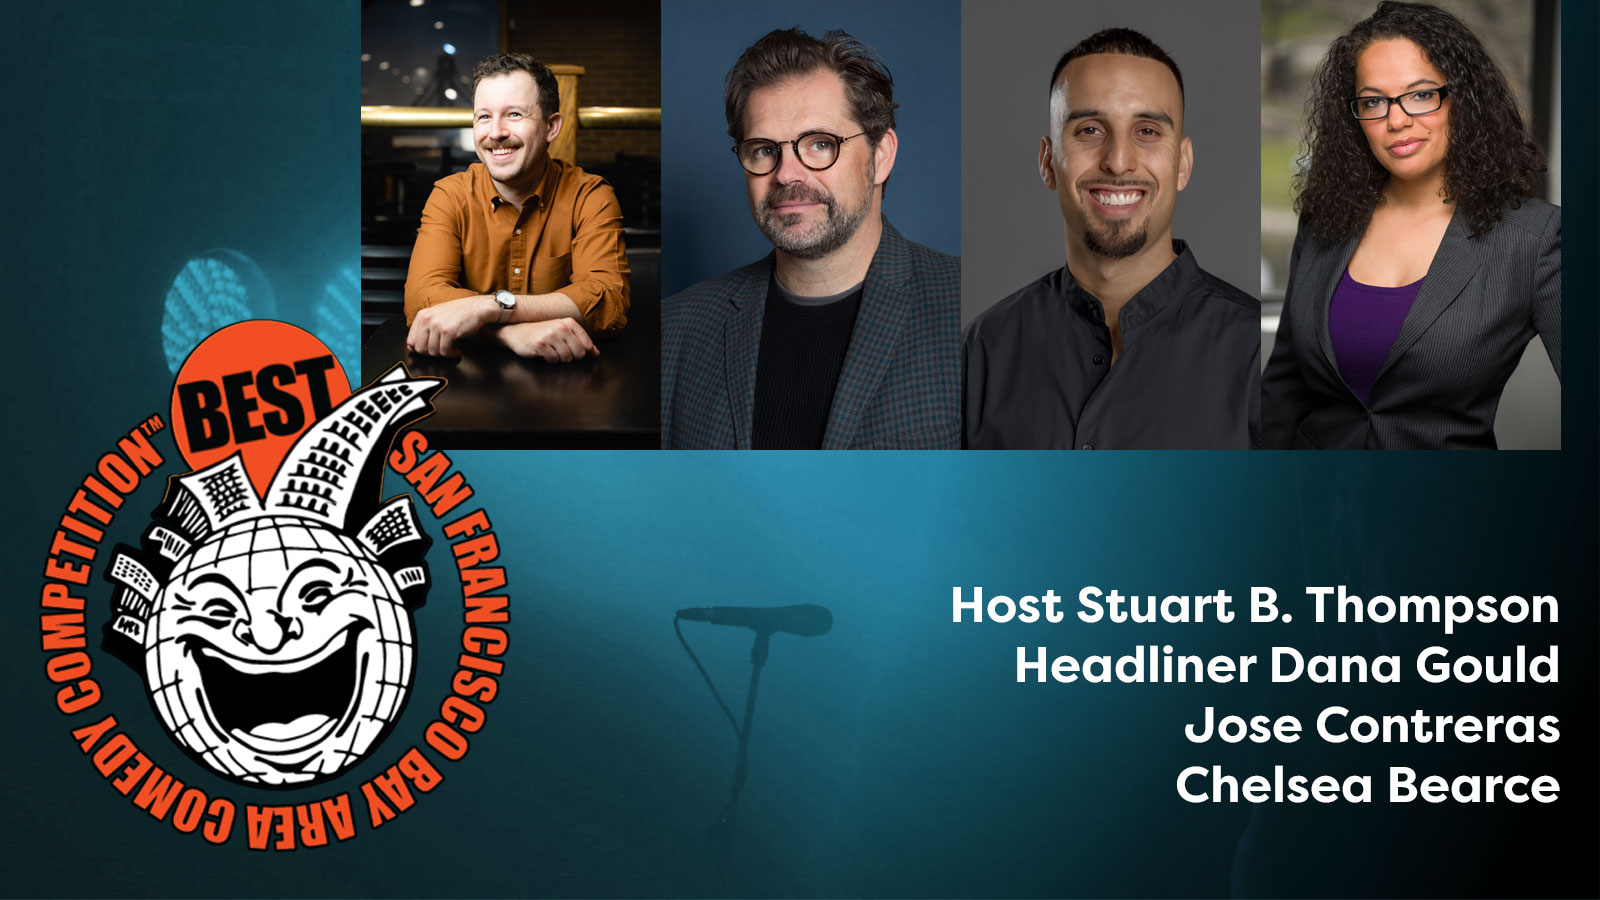 Best of San Francisco Comedy Competition - Host Stuart B. Thompson, Headliner Dana Gould, Jose Contreras, Chelsea Bearce